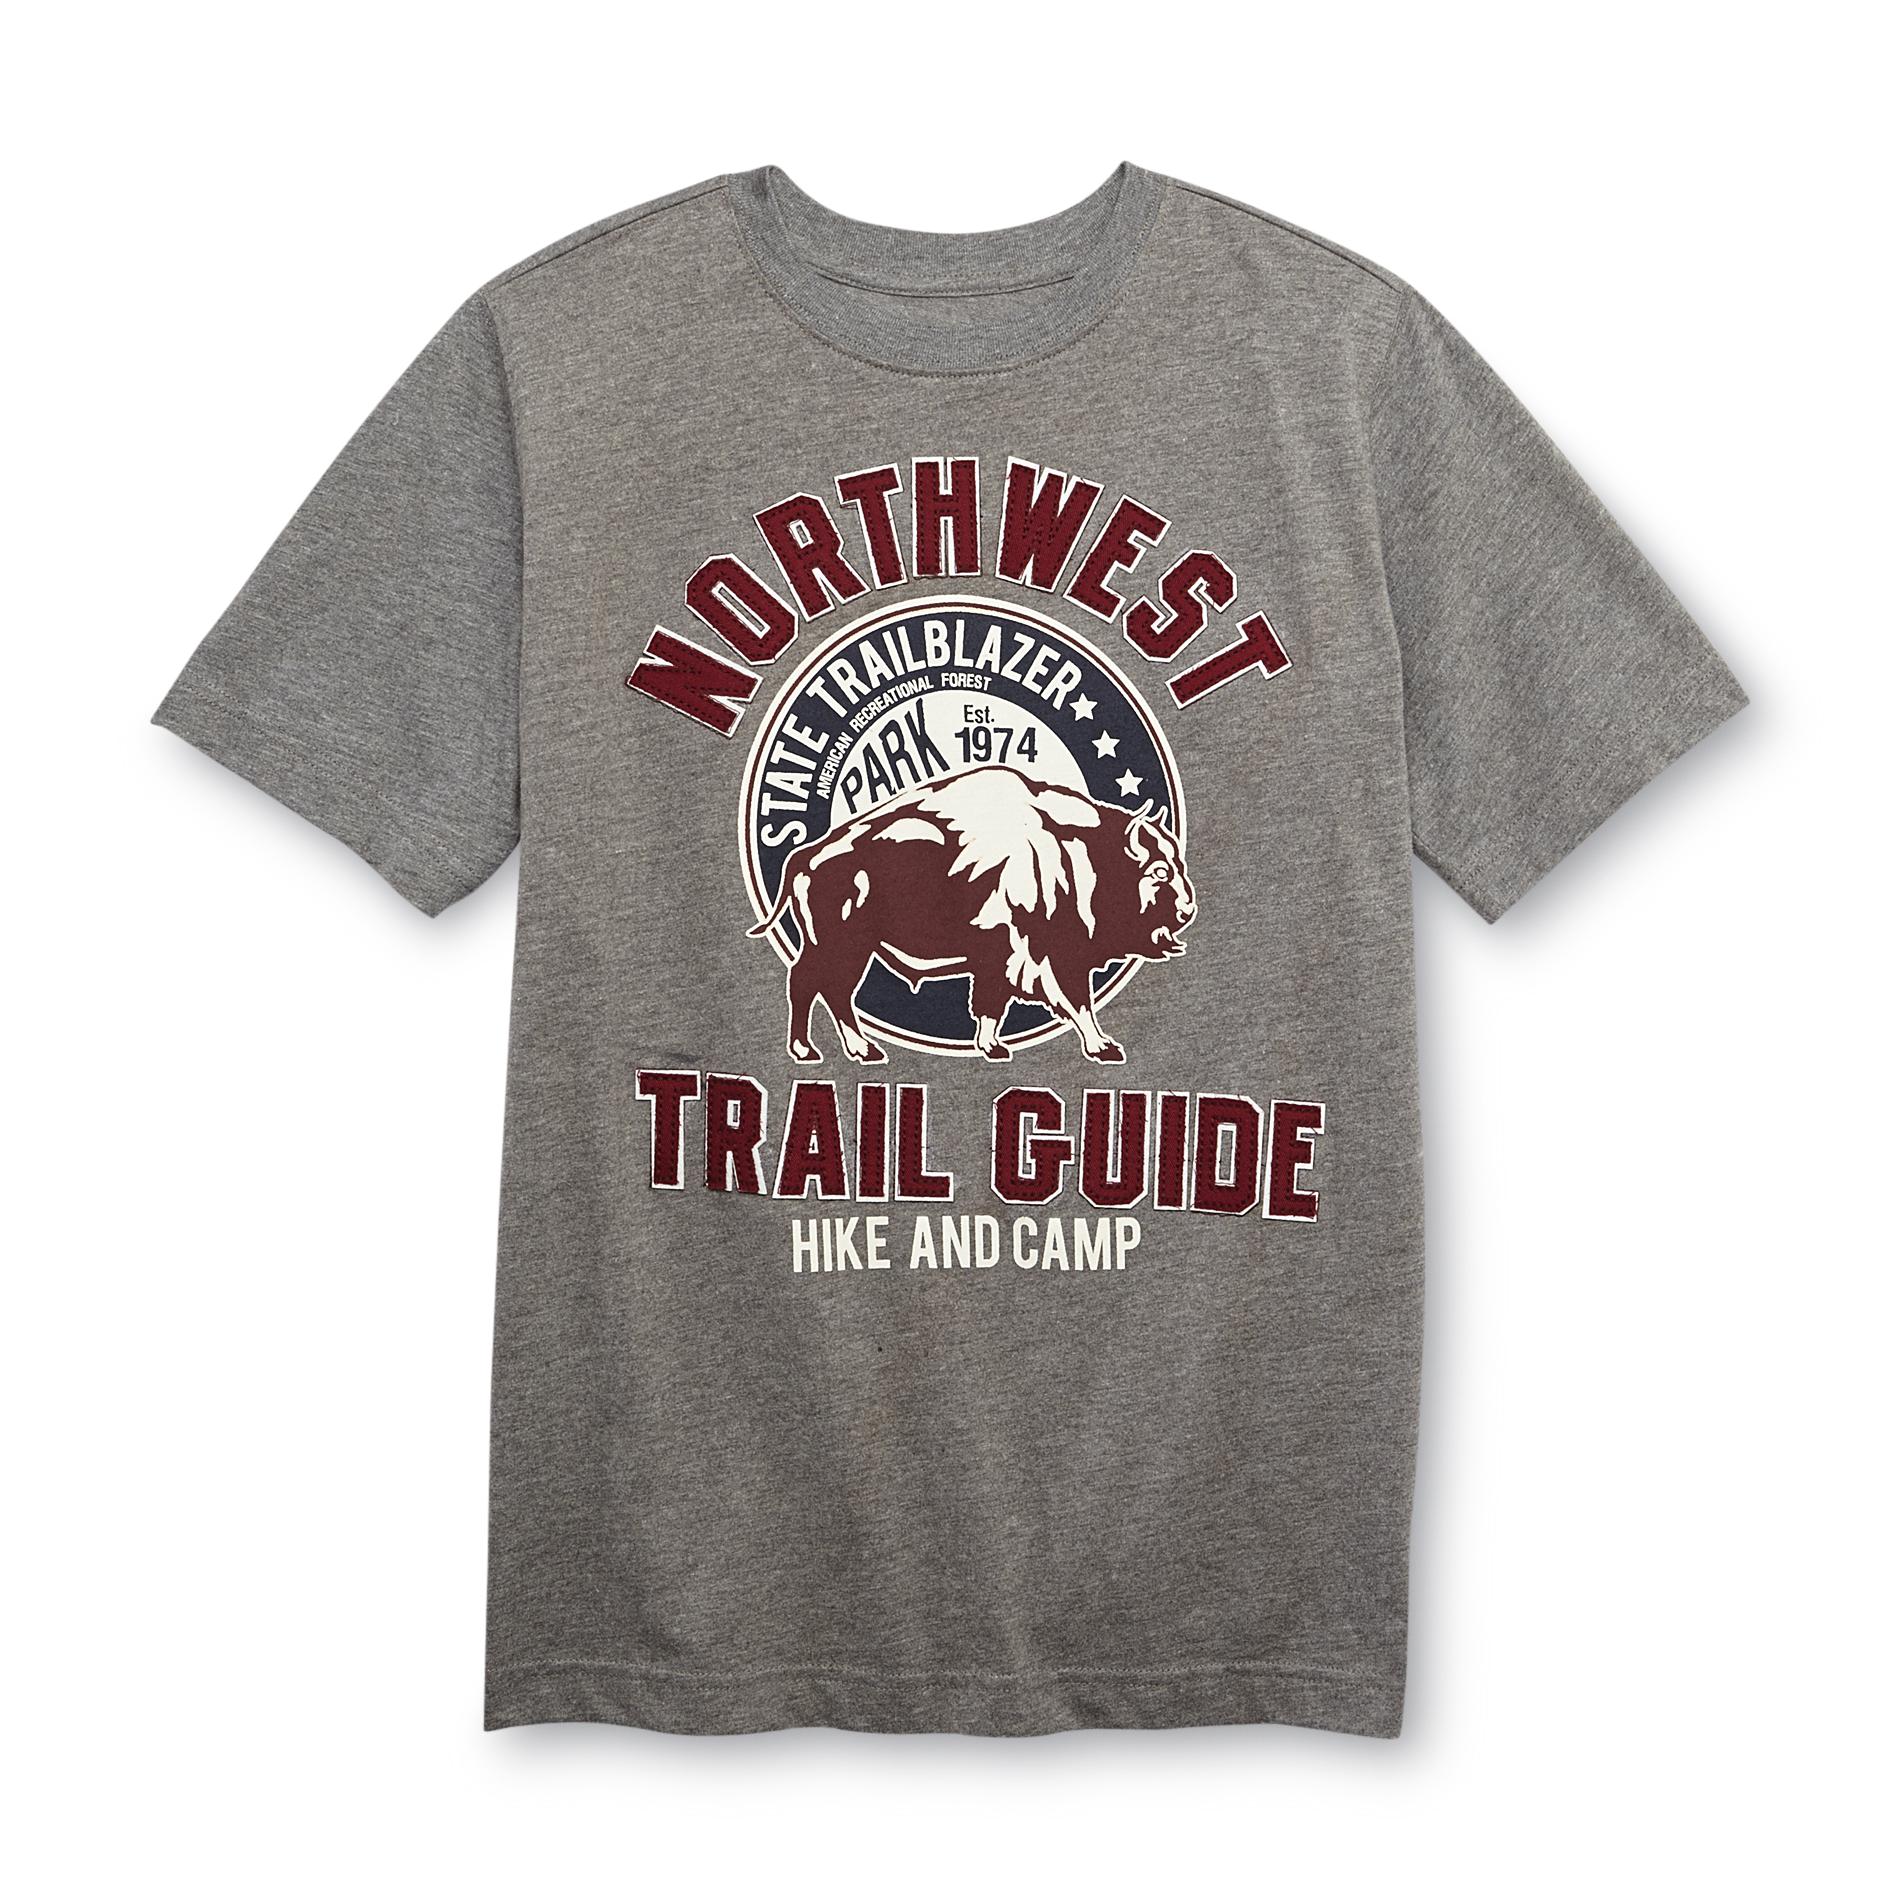 Canyon River Blues Boy's T-Shirt - Northwest Trail Guide